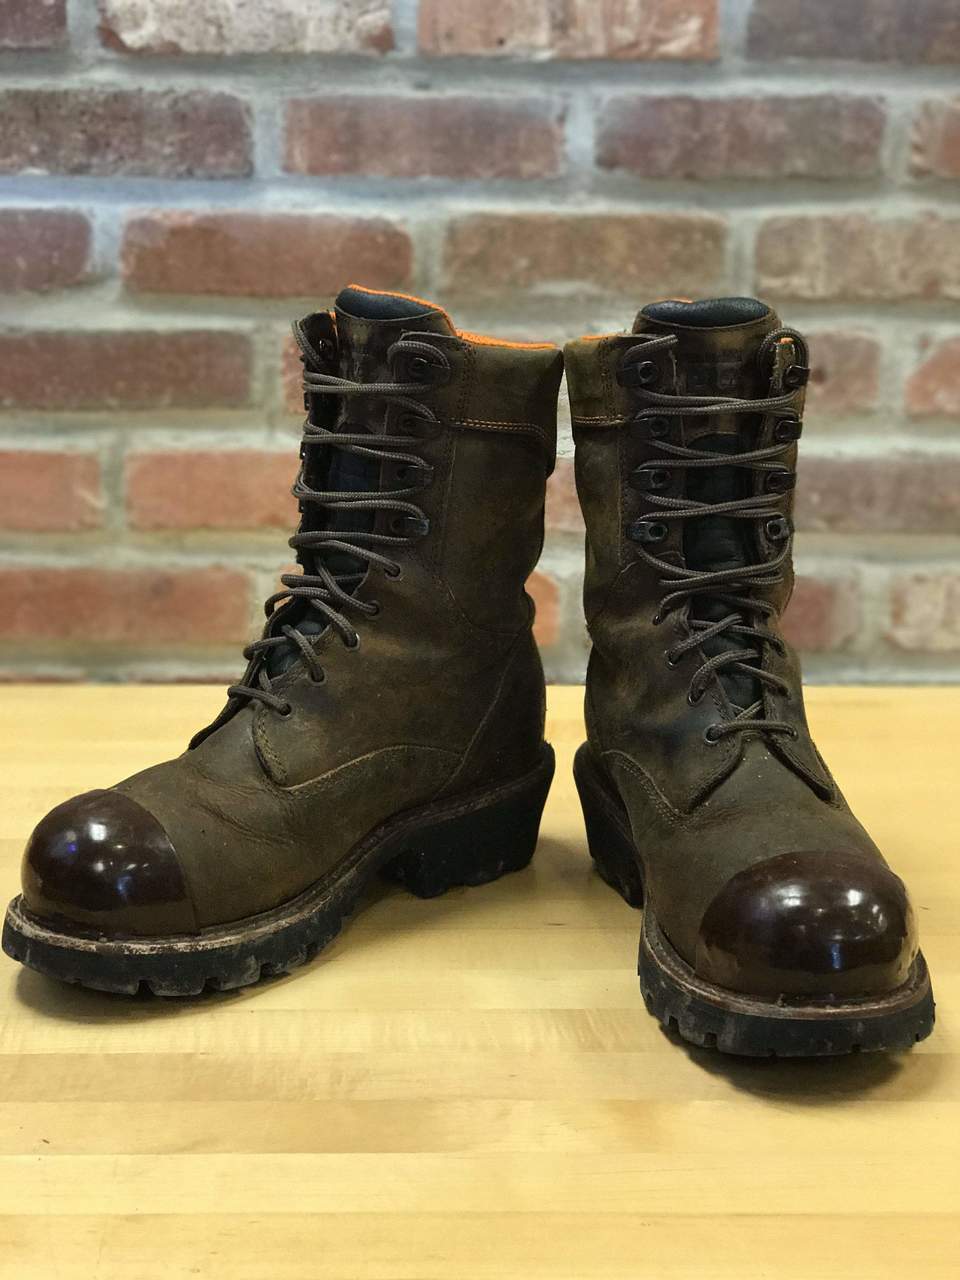 Tuff Toe on Carolina Steel toe Work boots to repair and protect